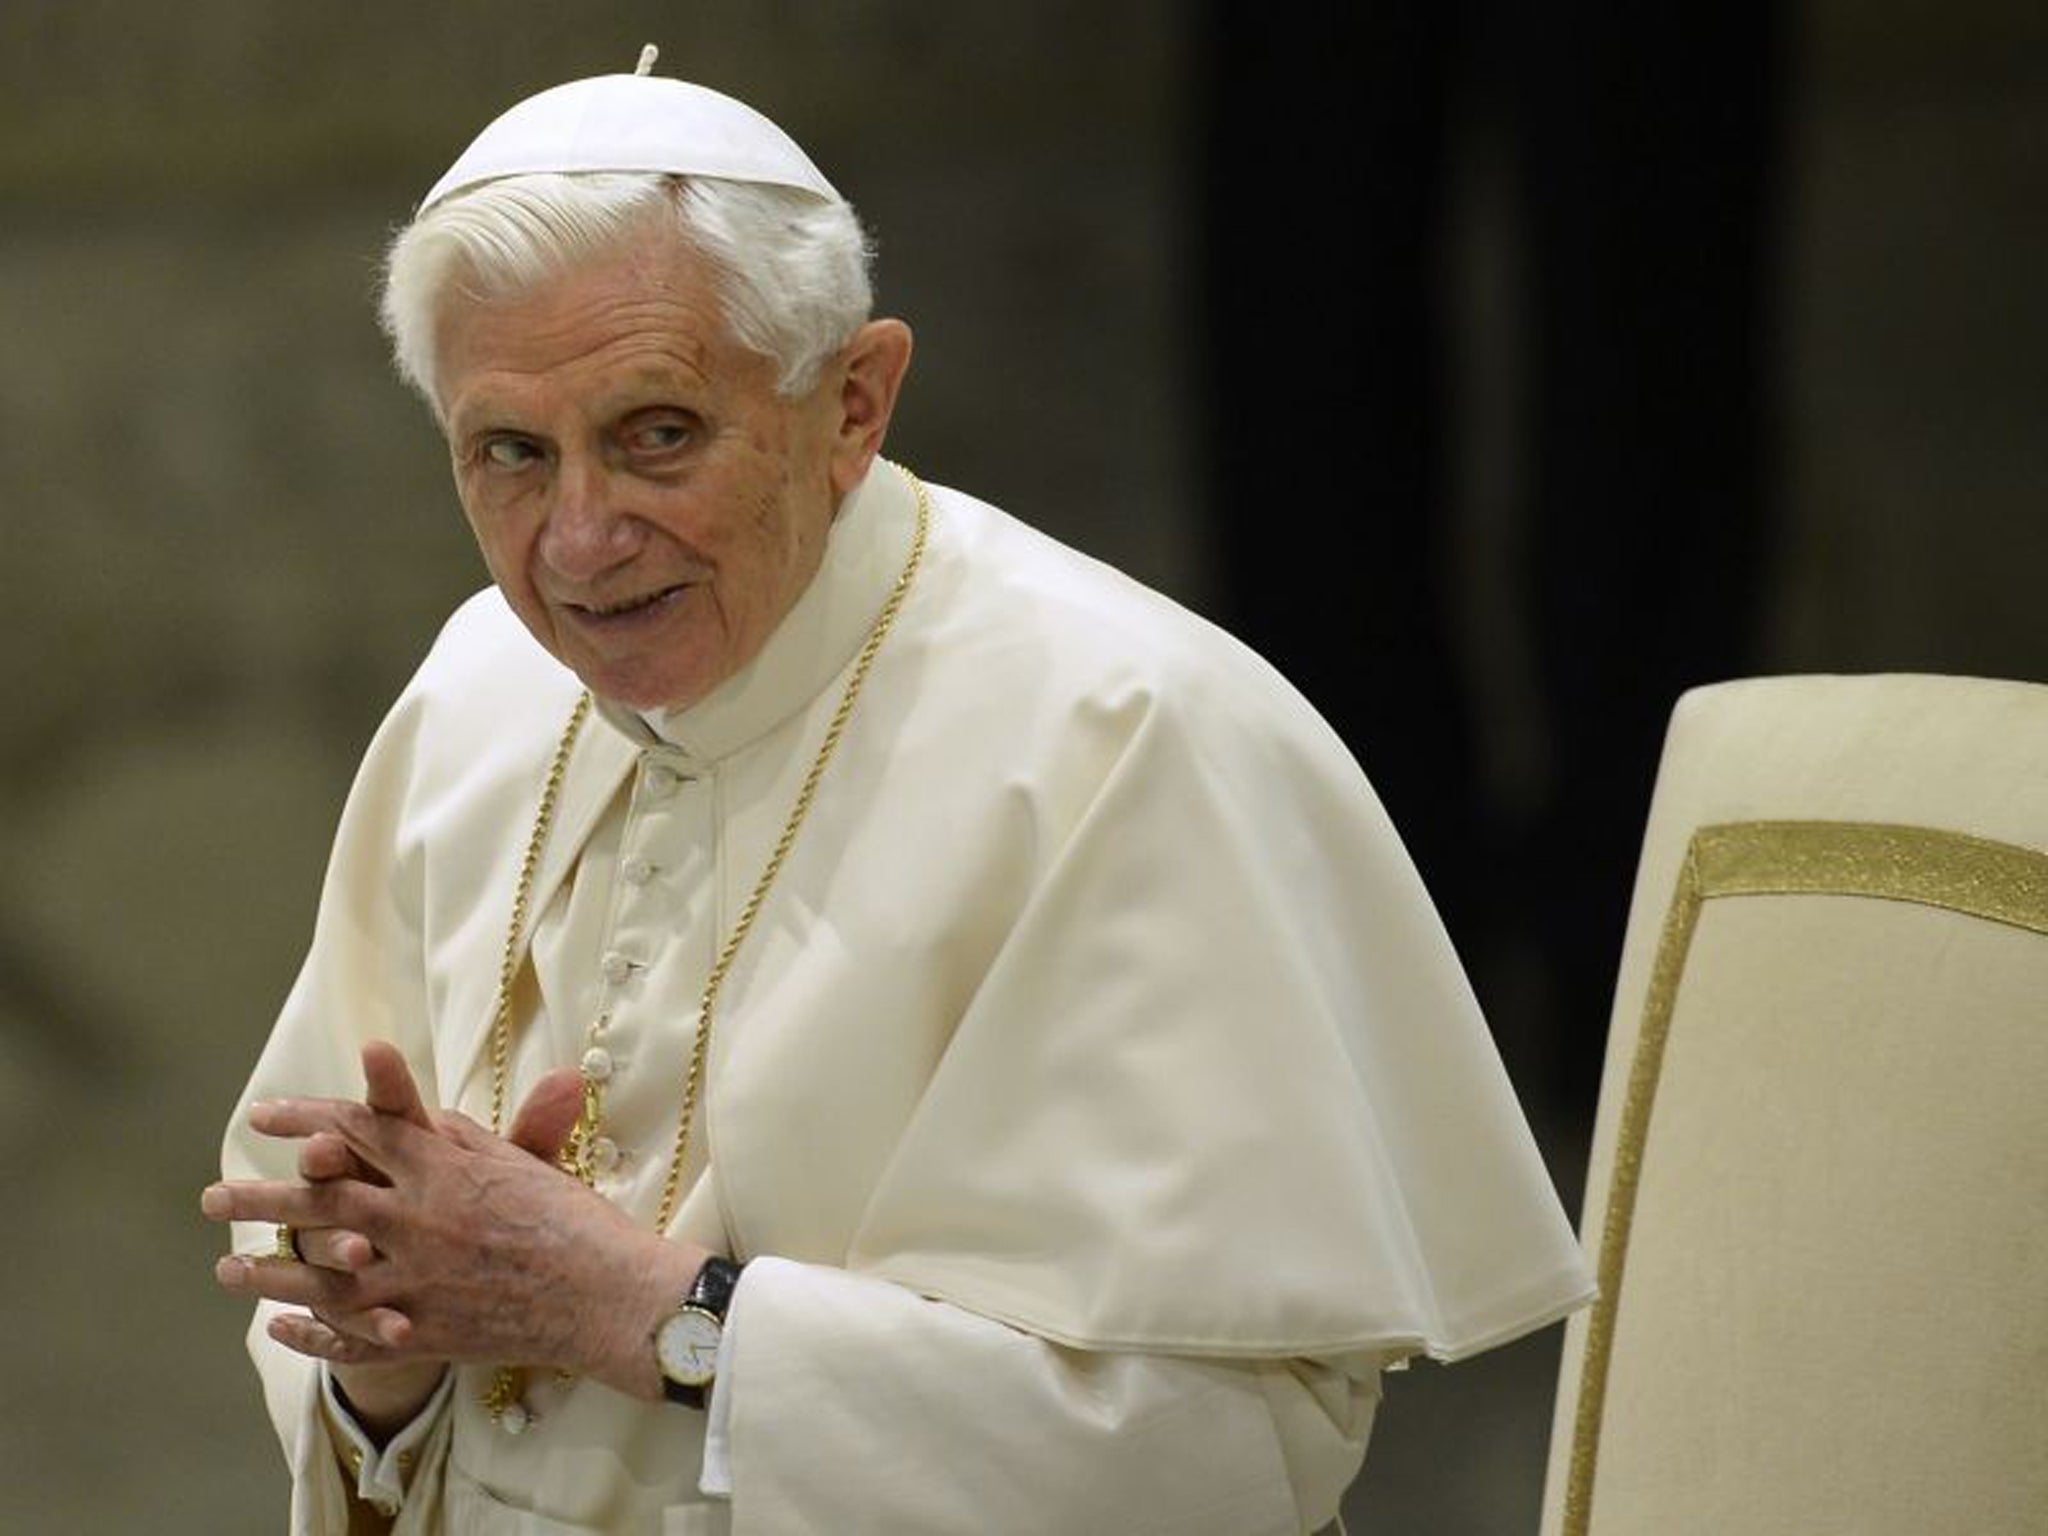 Pope Benedict XVI announced his resignation two weeks ago